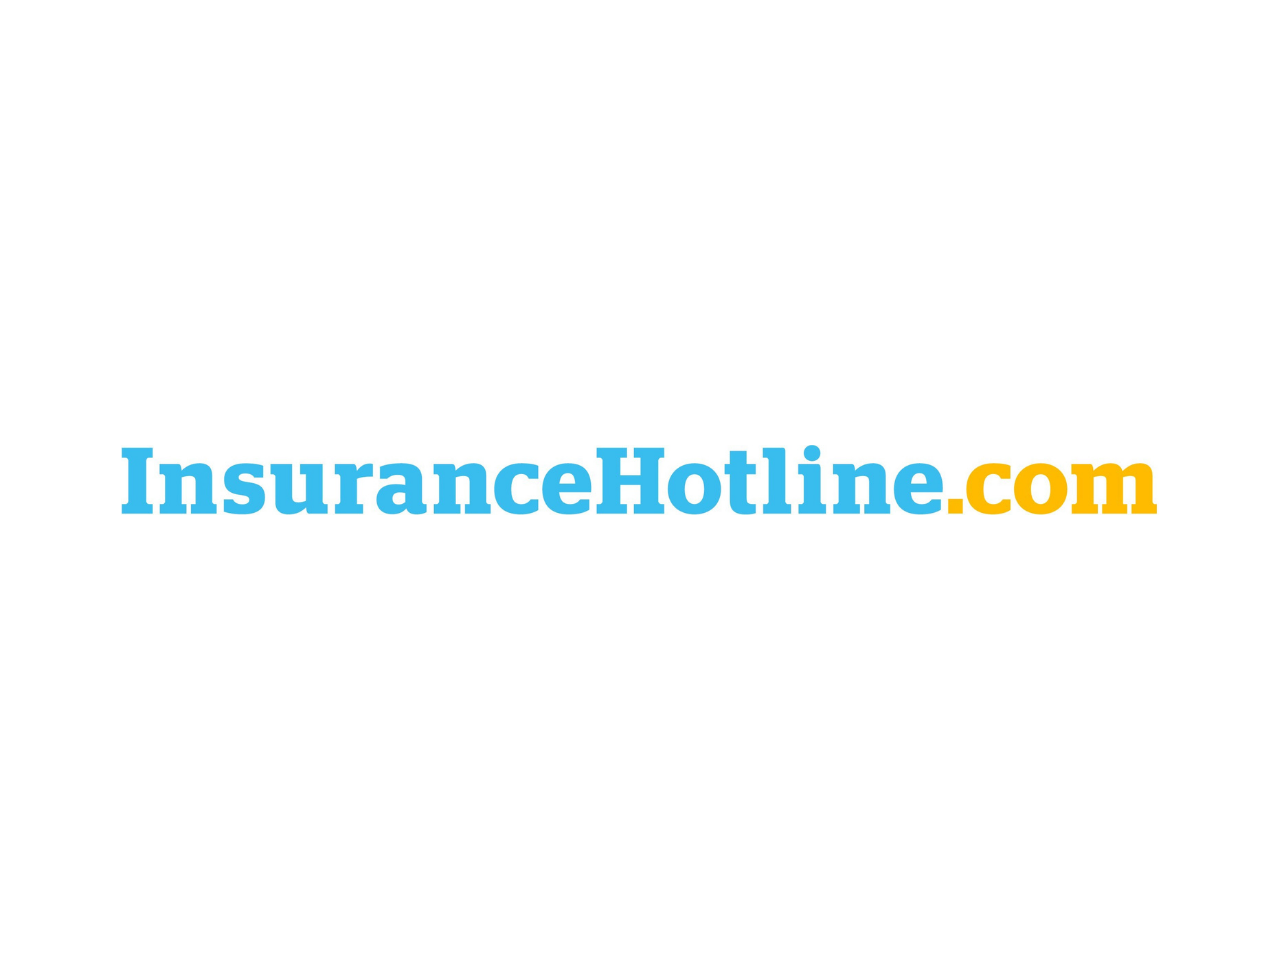 InsuranceHotline Review